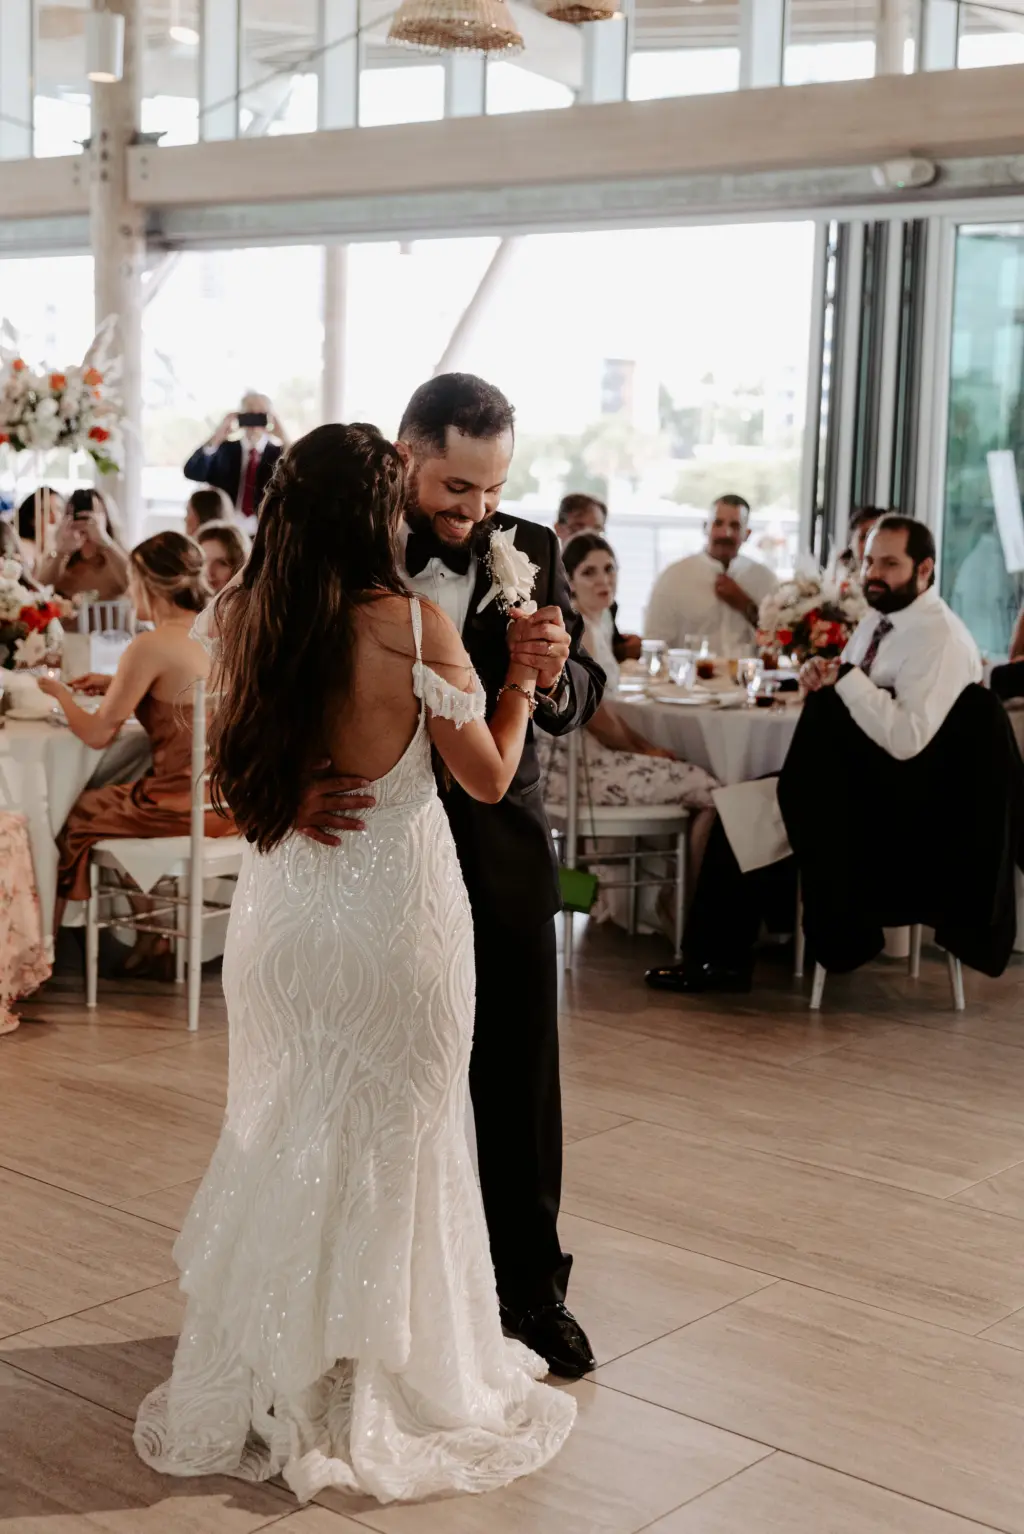 Bride and Groom First Dance Wedding Portrait | Tampa Bay DJ Breezin Entertainment